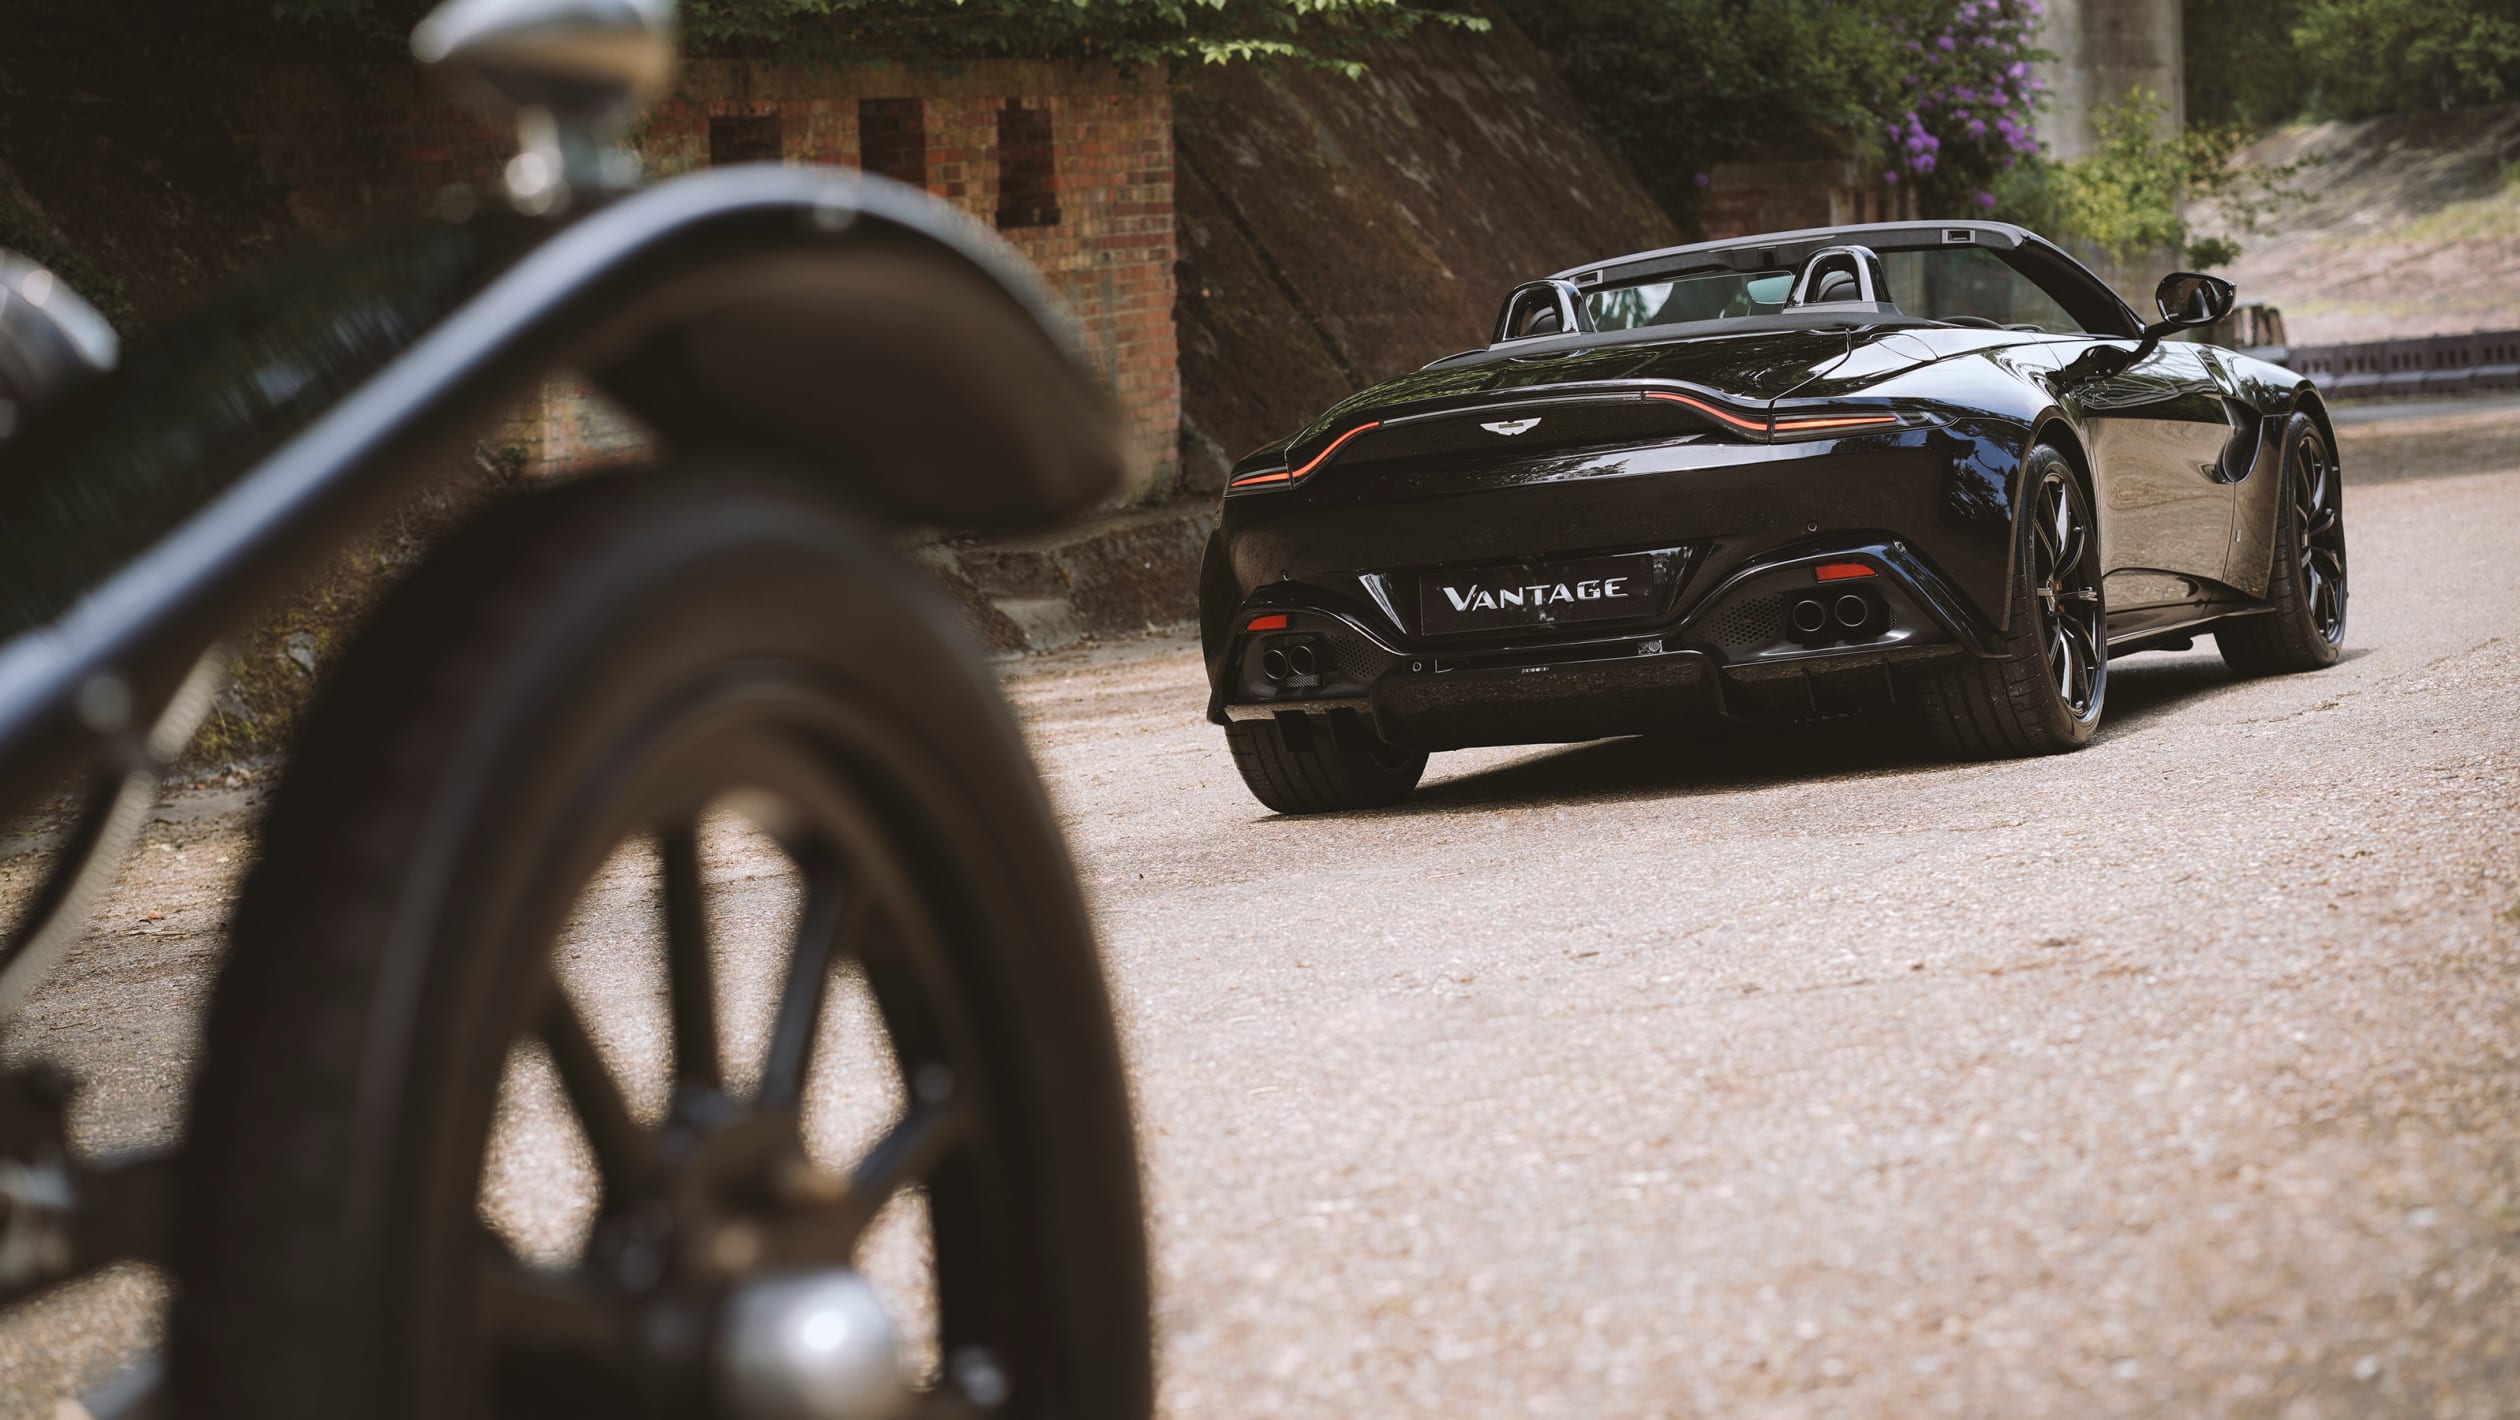 Aston Martin A3 Vantage Roadster 2